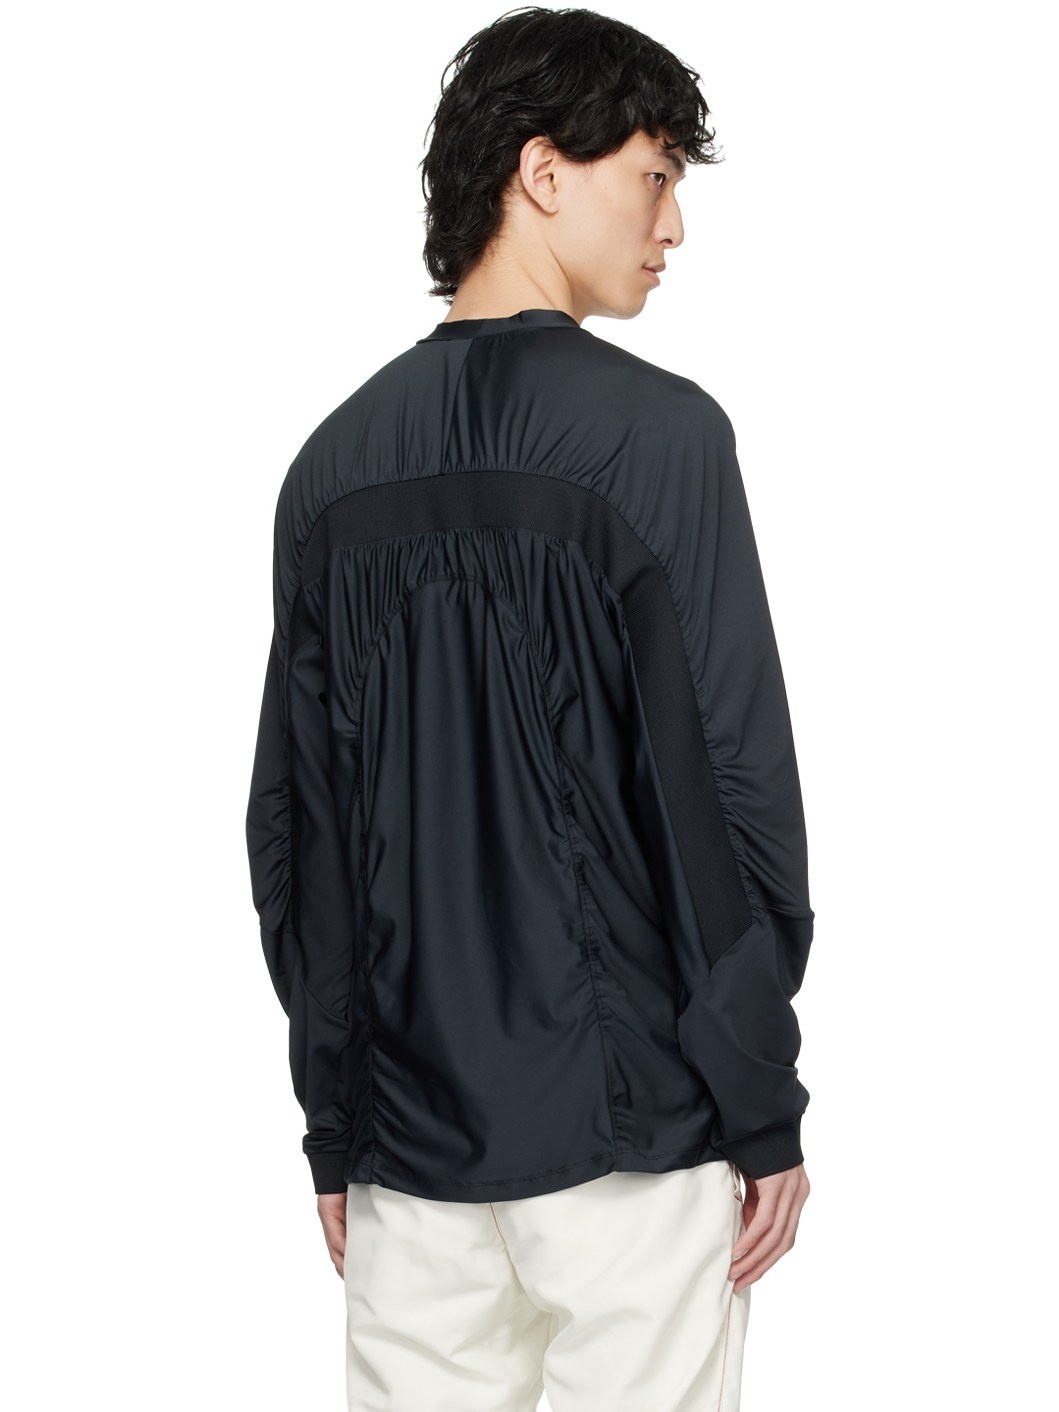 Black Reebok Edition Long Sleeve T-Shirt - 3